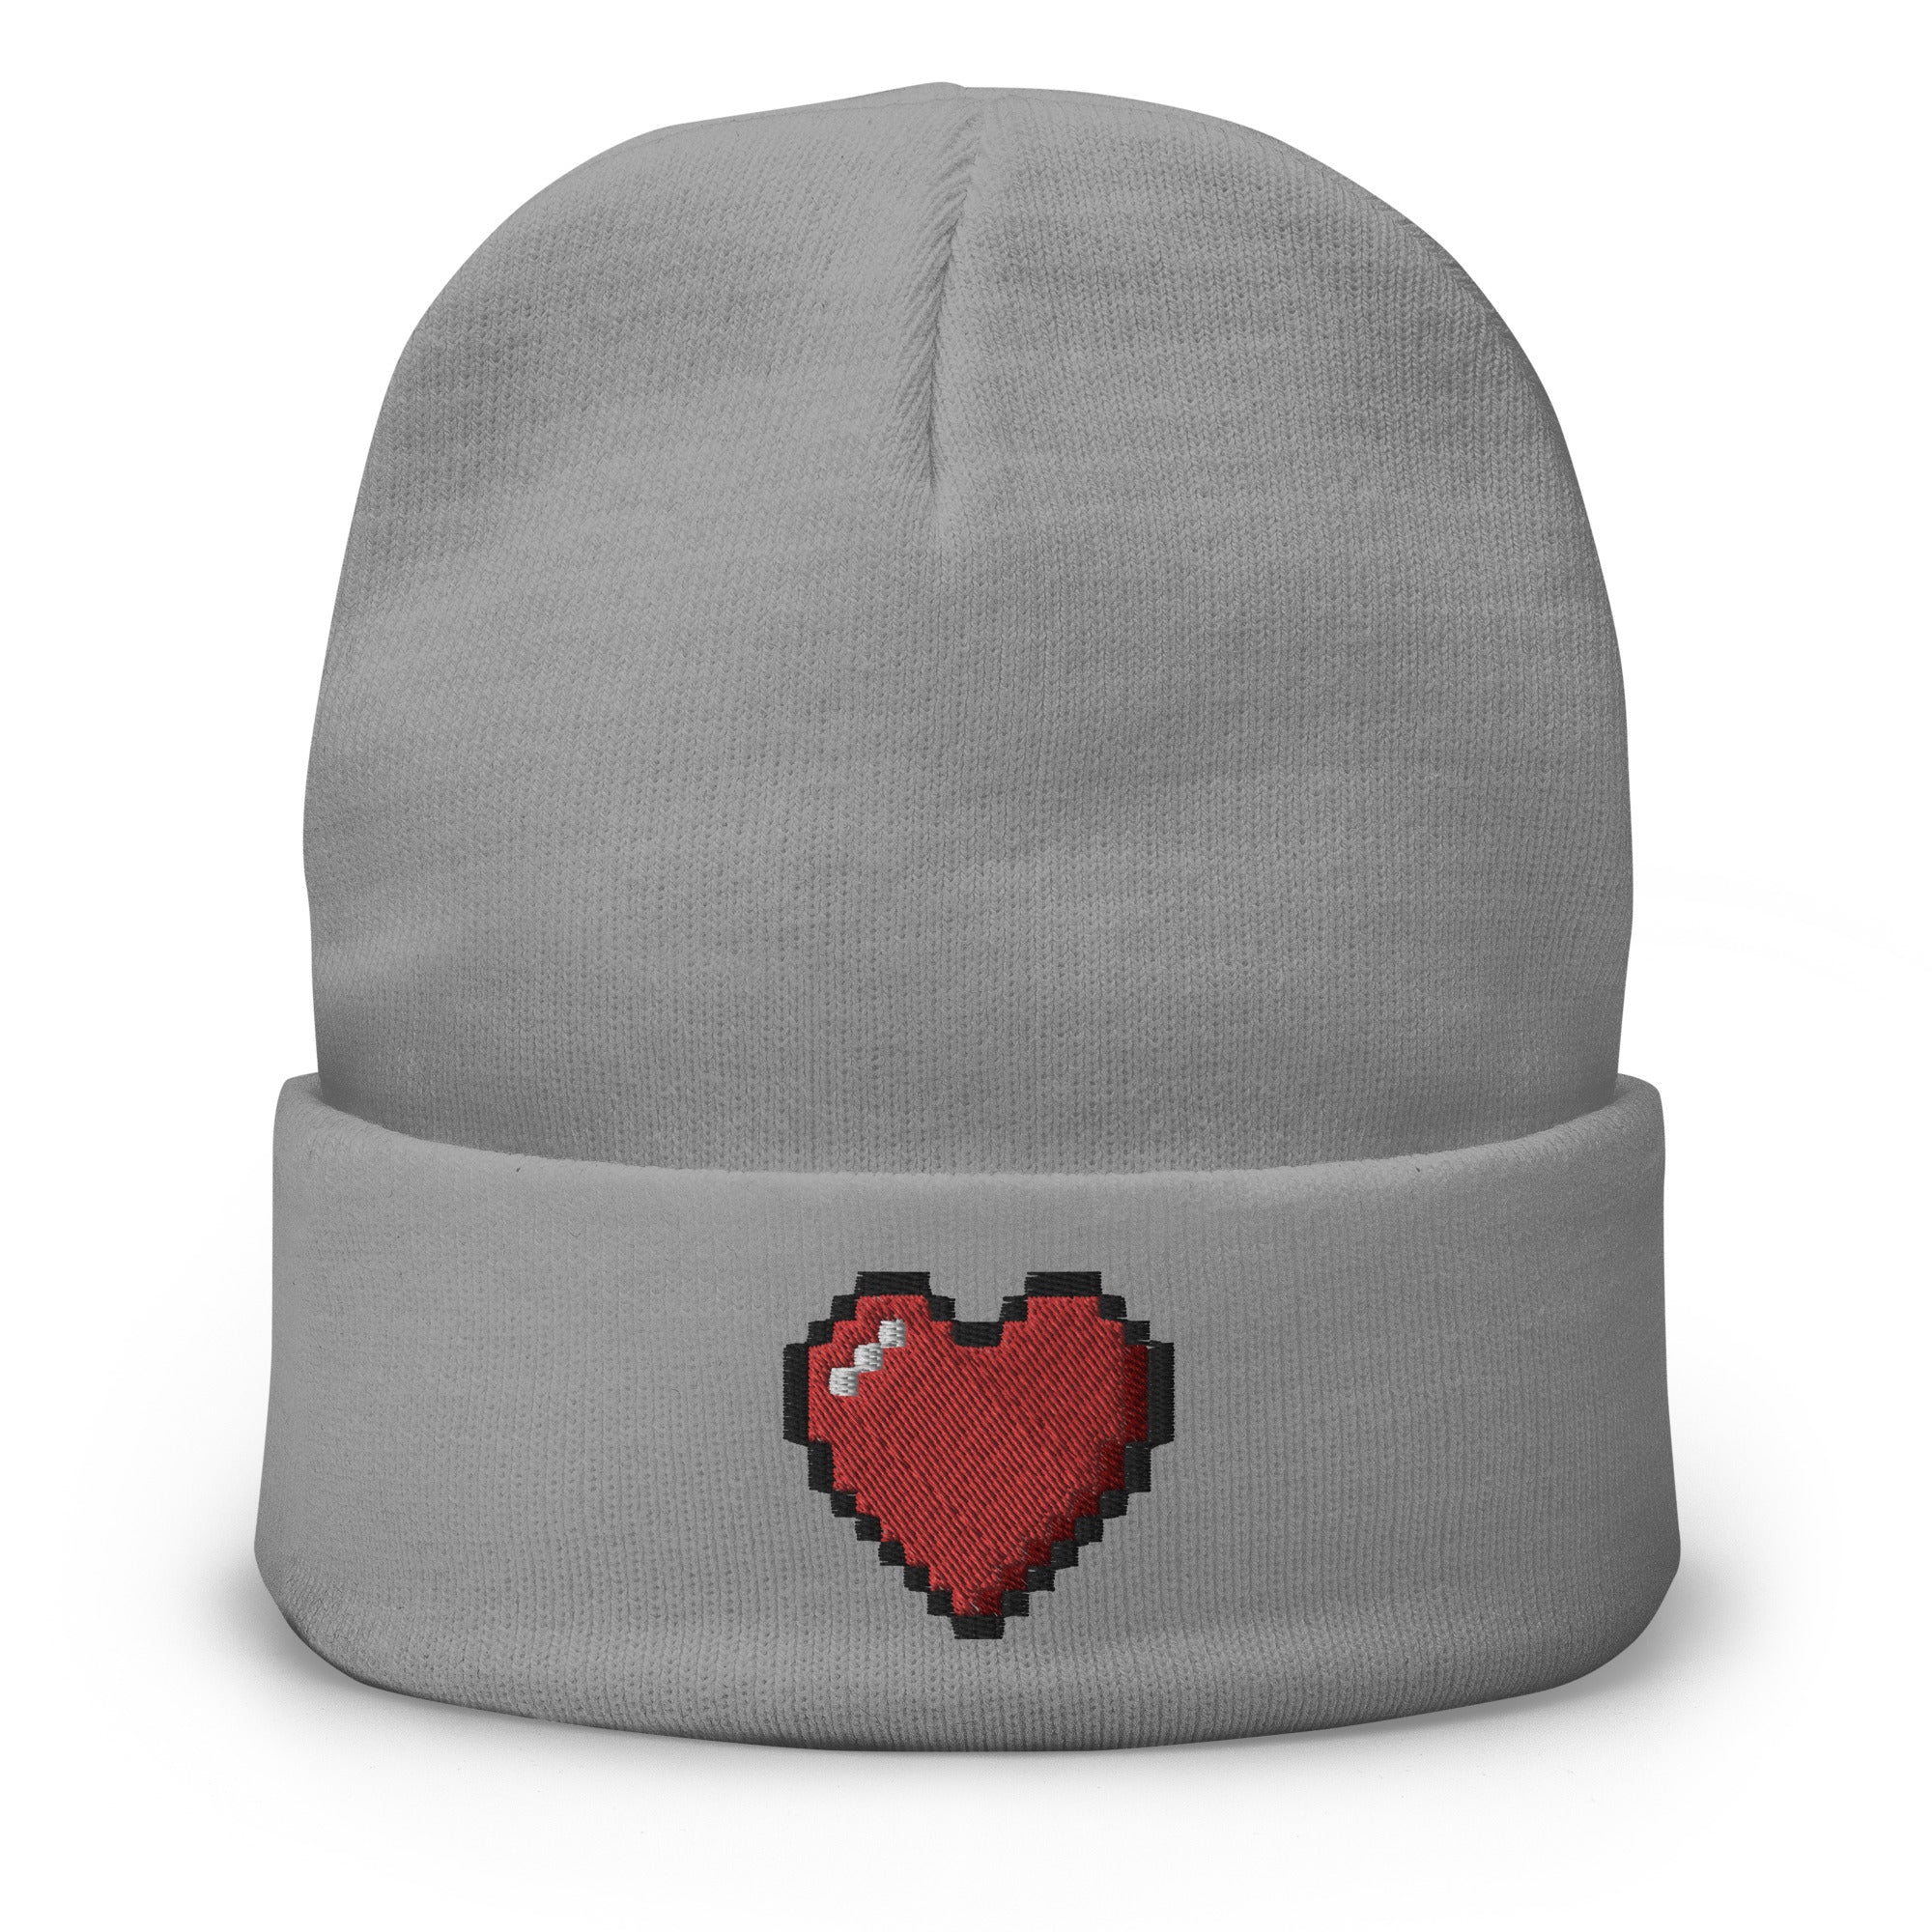 Retro 8 Bit Video Game Pixelated Heart Embroidered Cuff Beanie